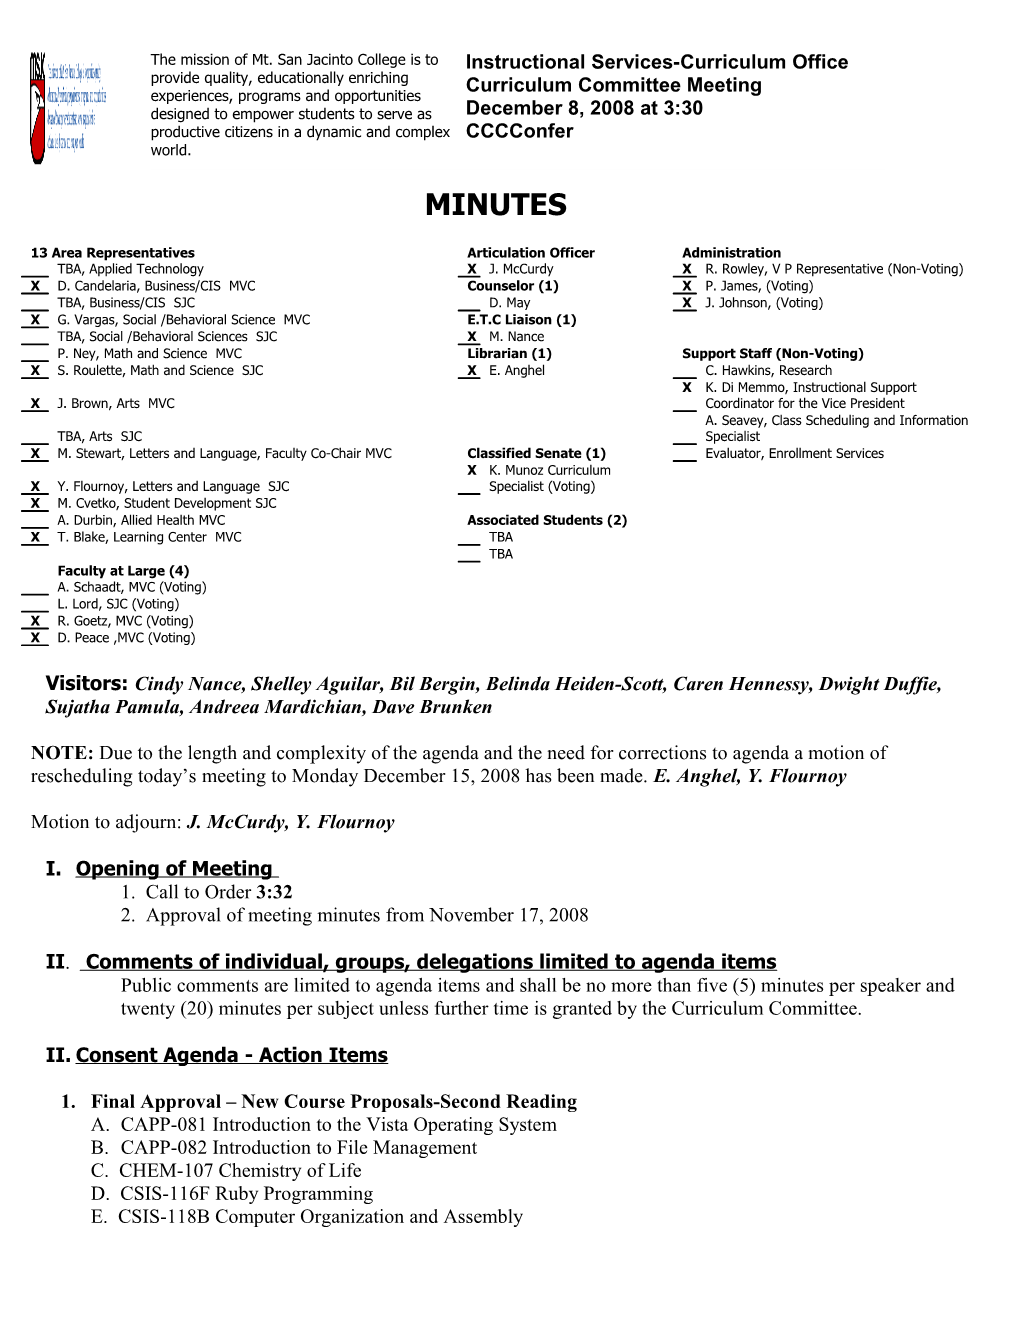 Curriculum Committee Meeting Minutes Dec 8, 2008